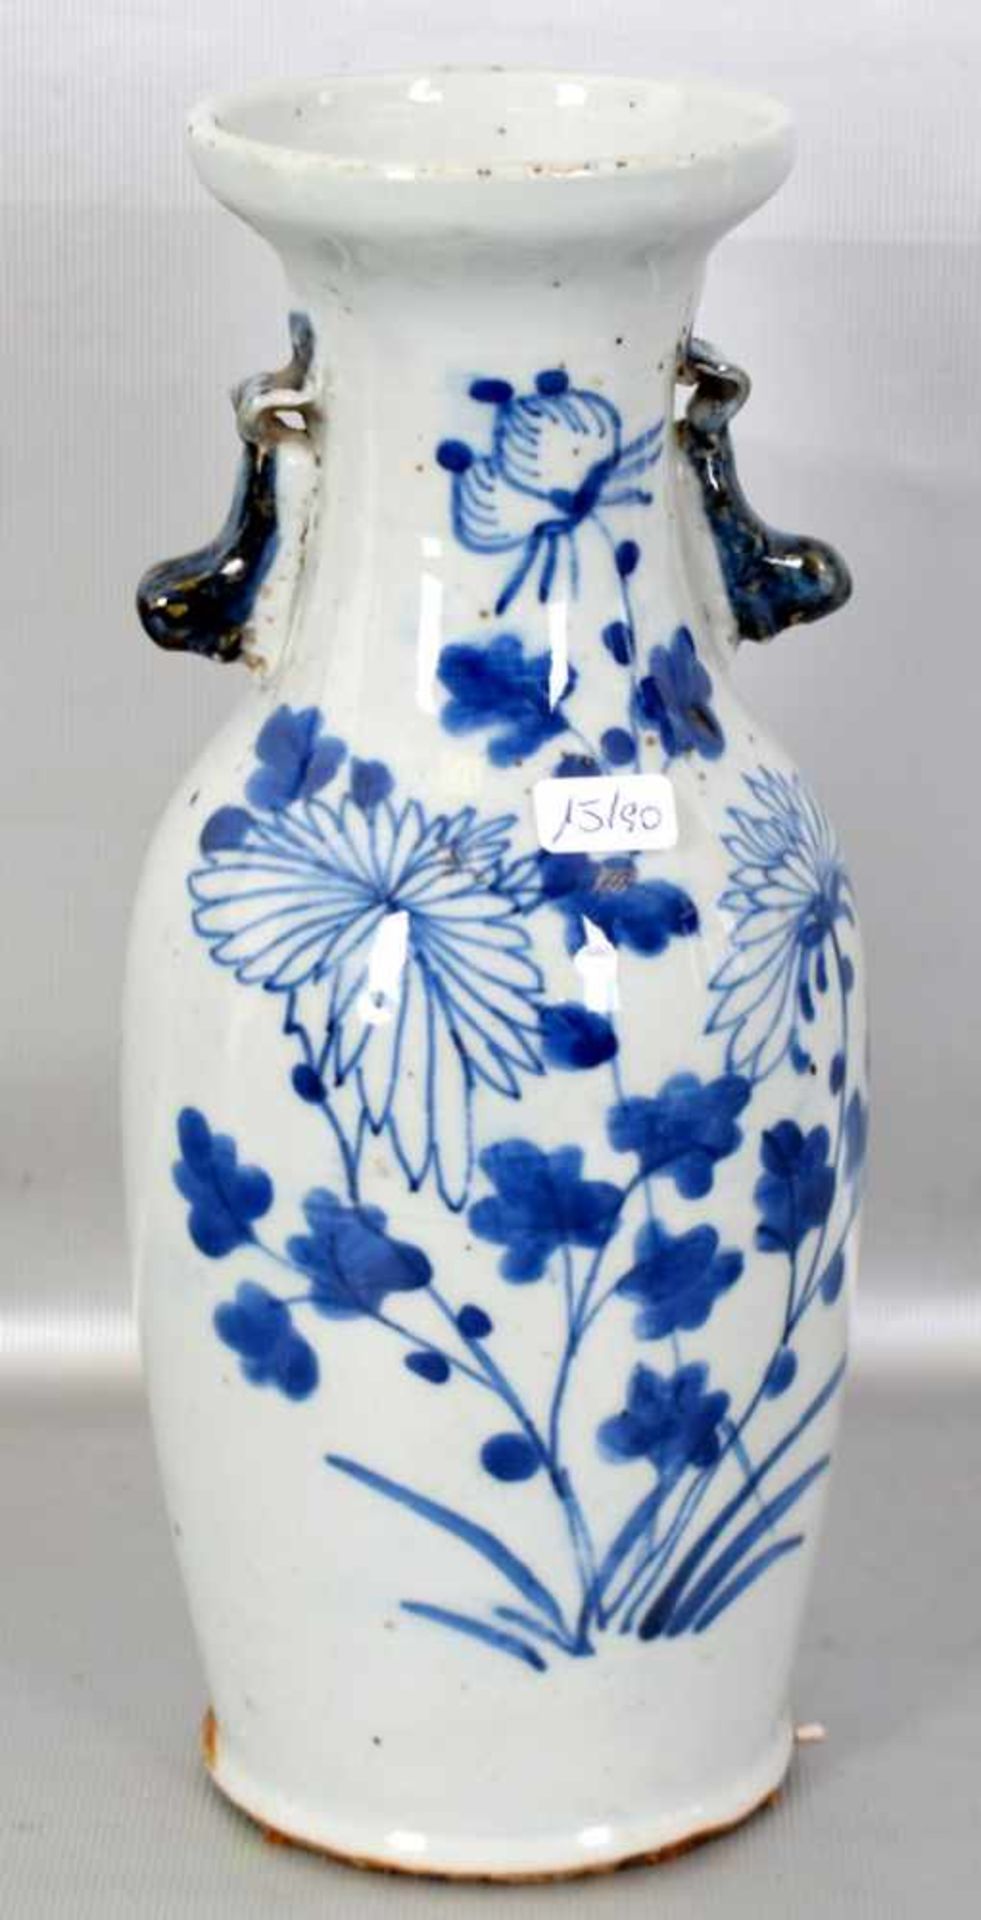 Vase Porzellan, Wandung mit blauer Blumenbemalung, zwei verzierte Griffe, H 23 cm, 19. Jh.